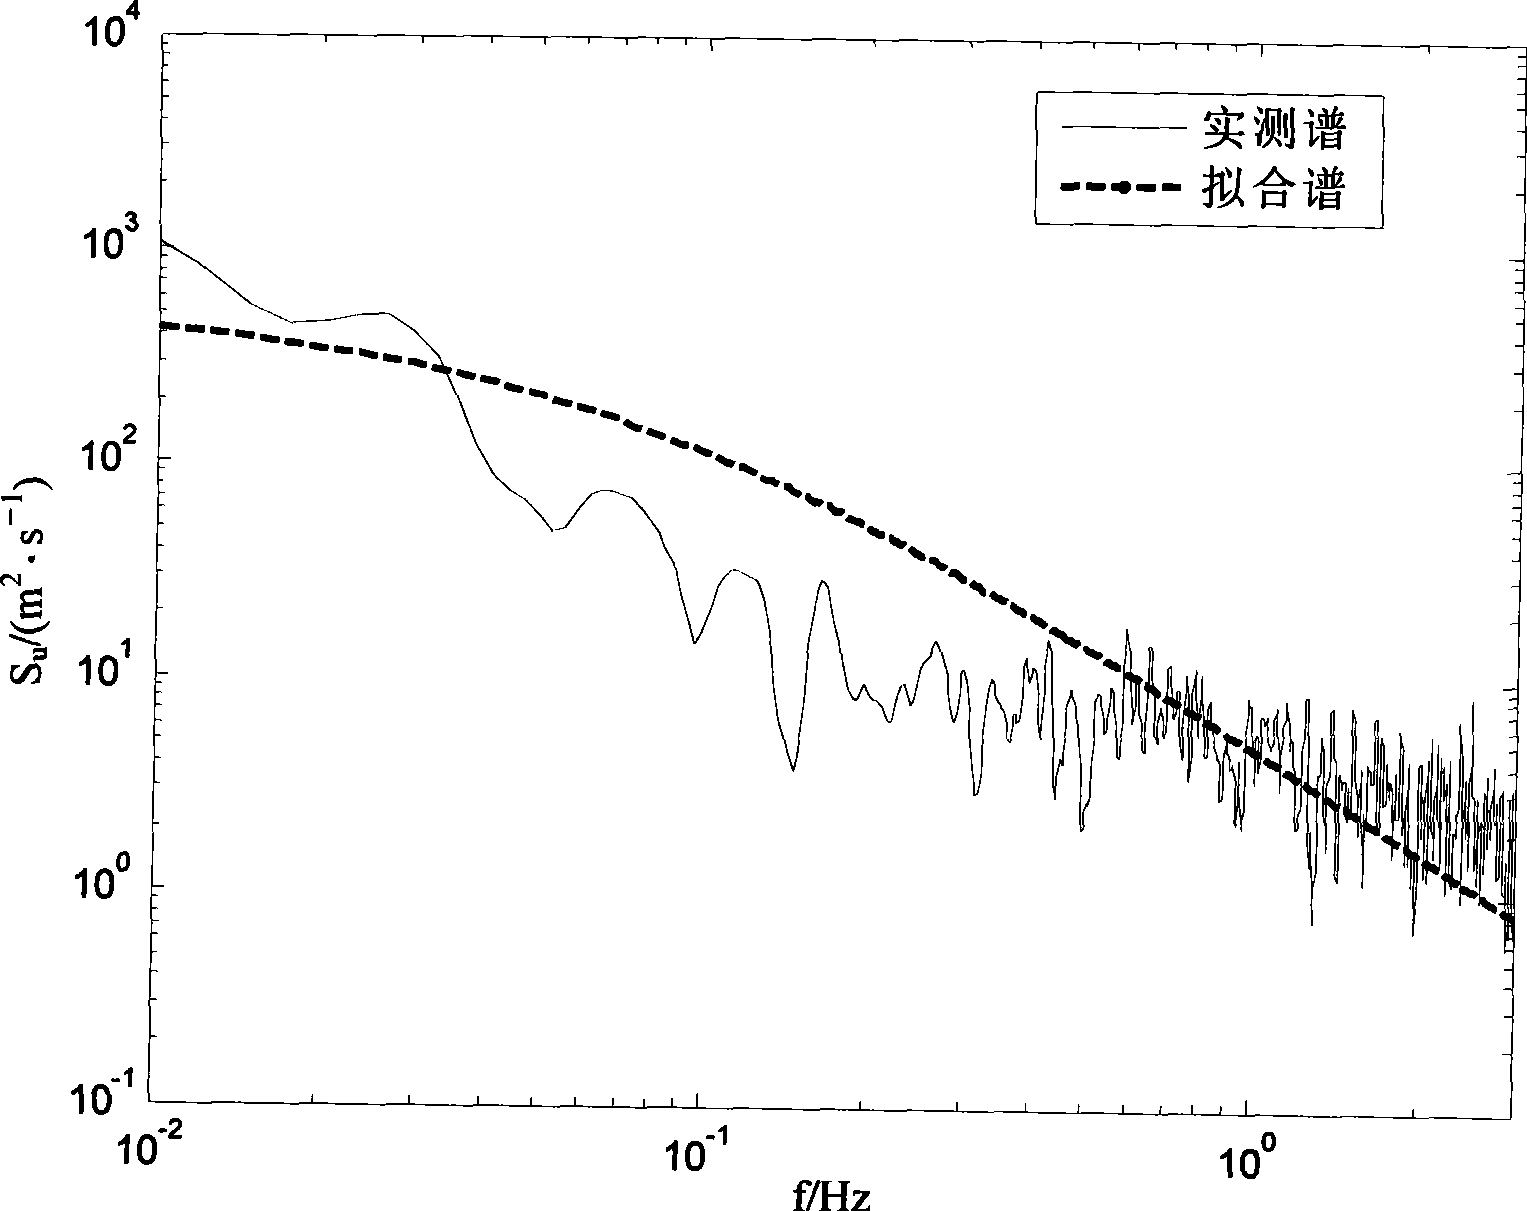 Fine simulation method of wind spectrum model